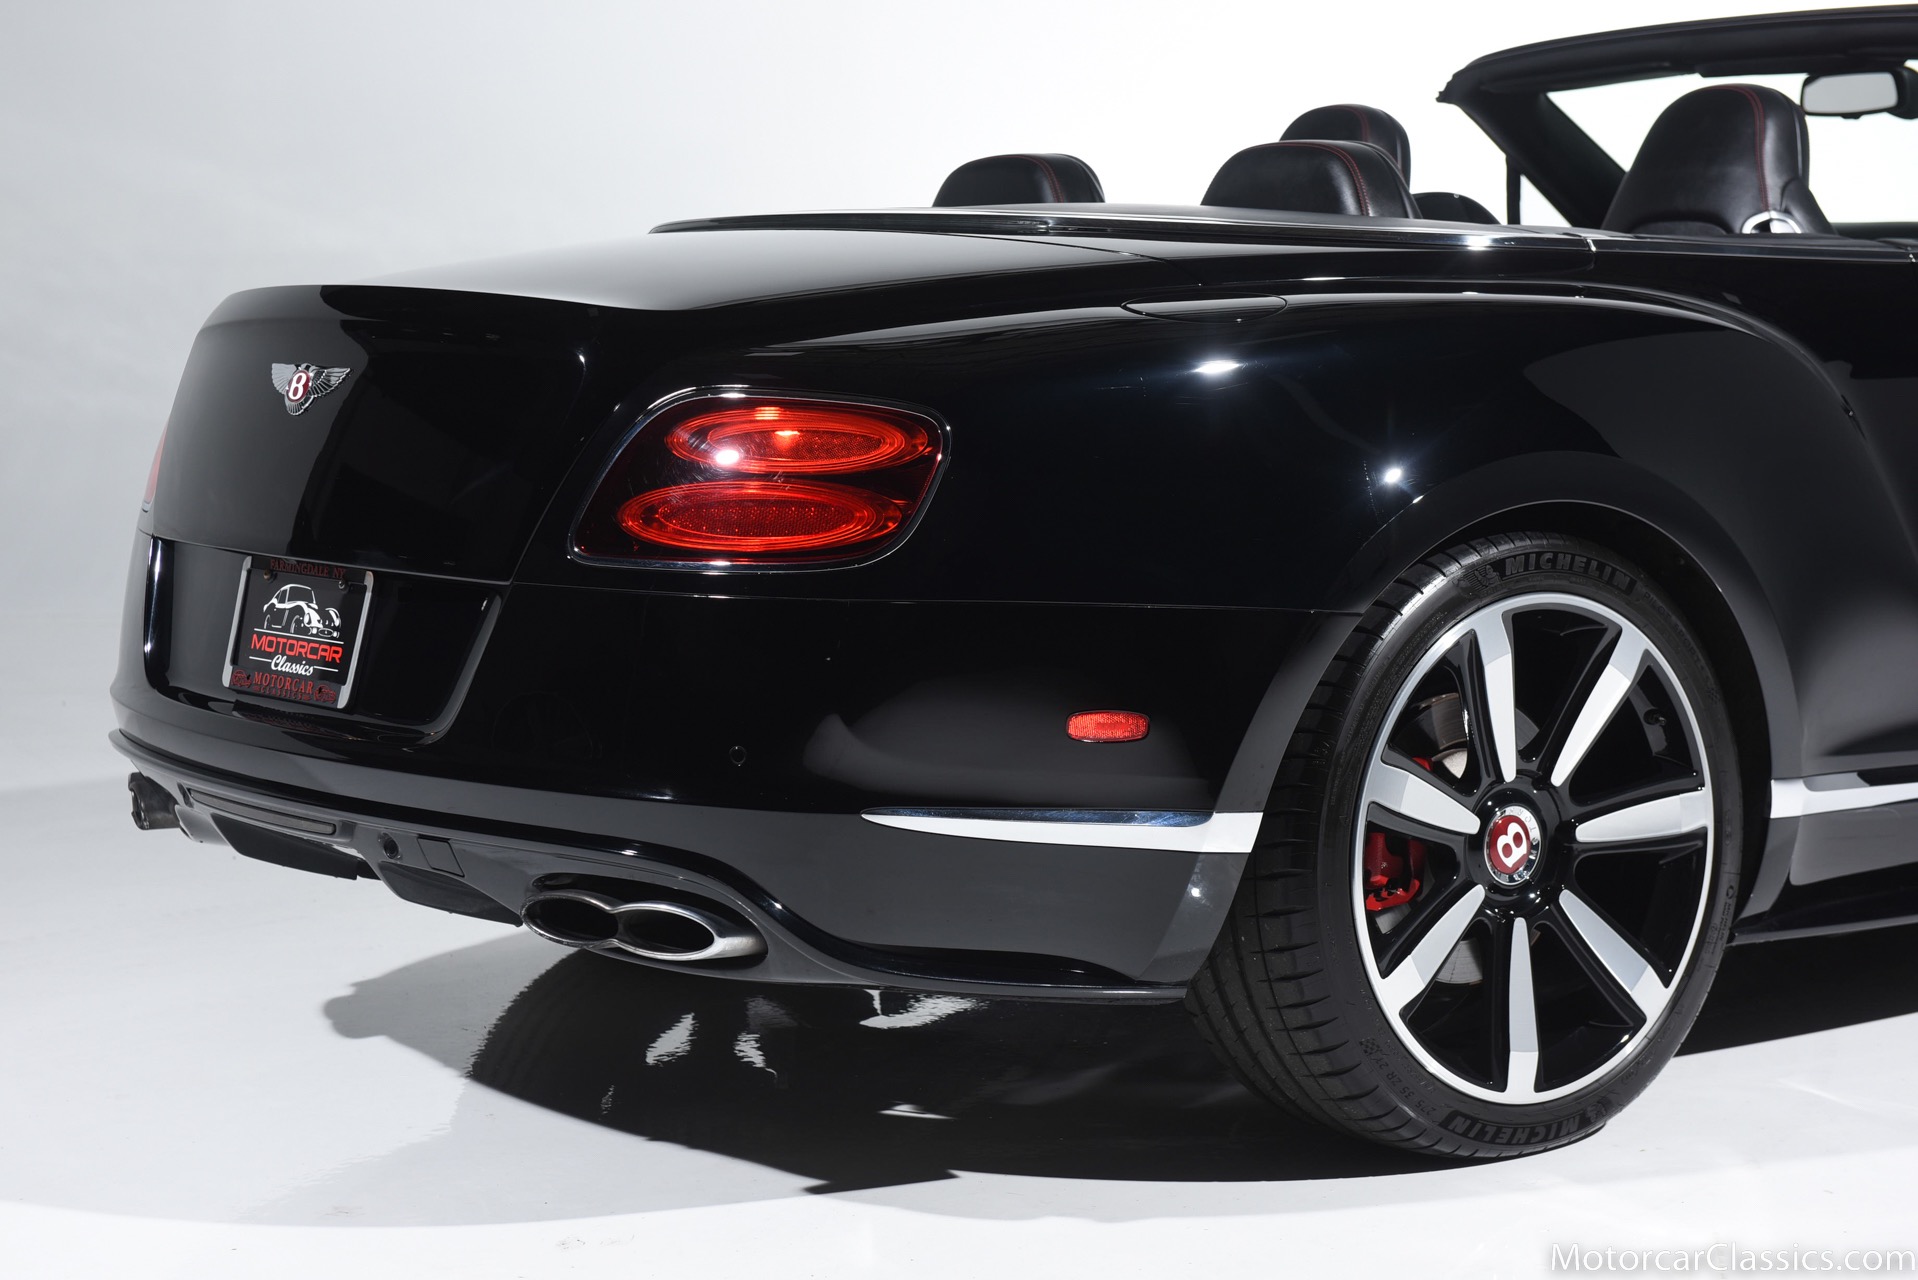 2014 Bentley Continental GT V8 S